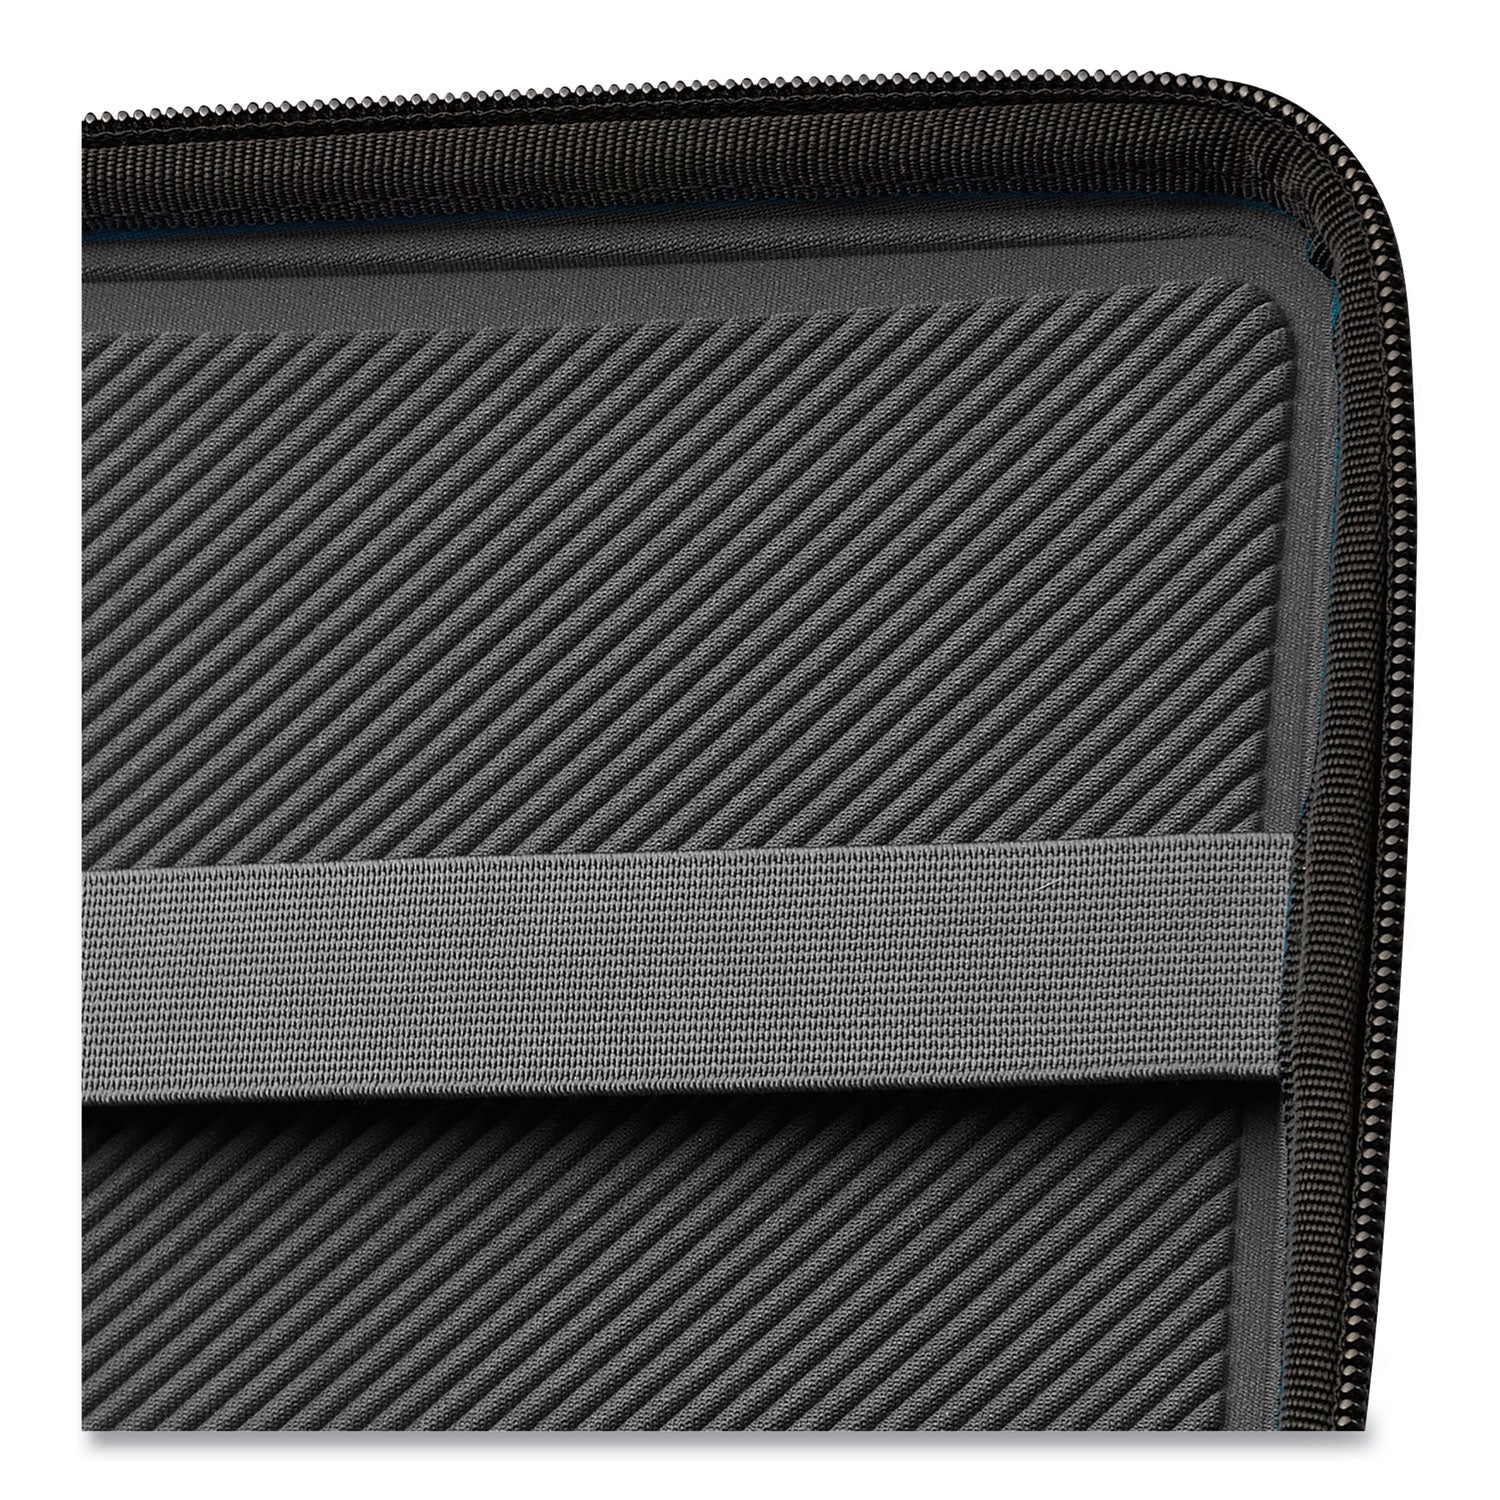 portable-hard-drive-case-molded-eva-black_clg3201314 - 5